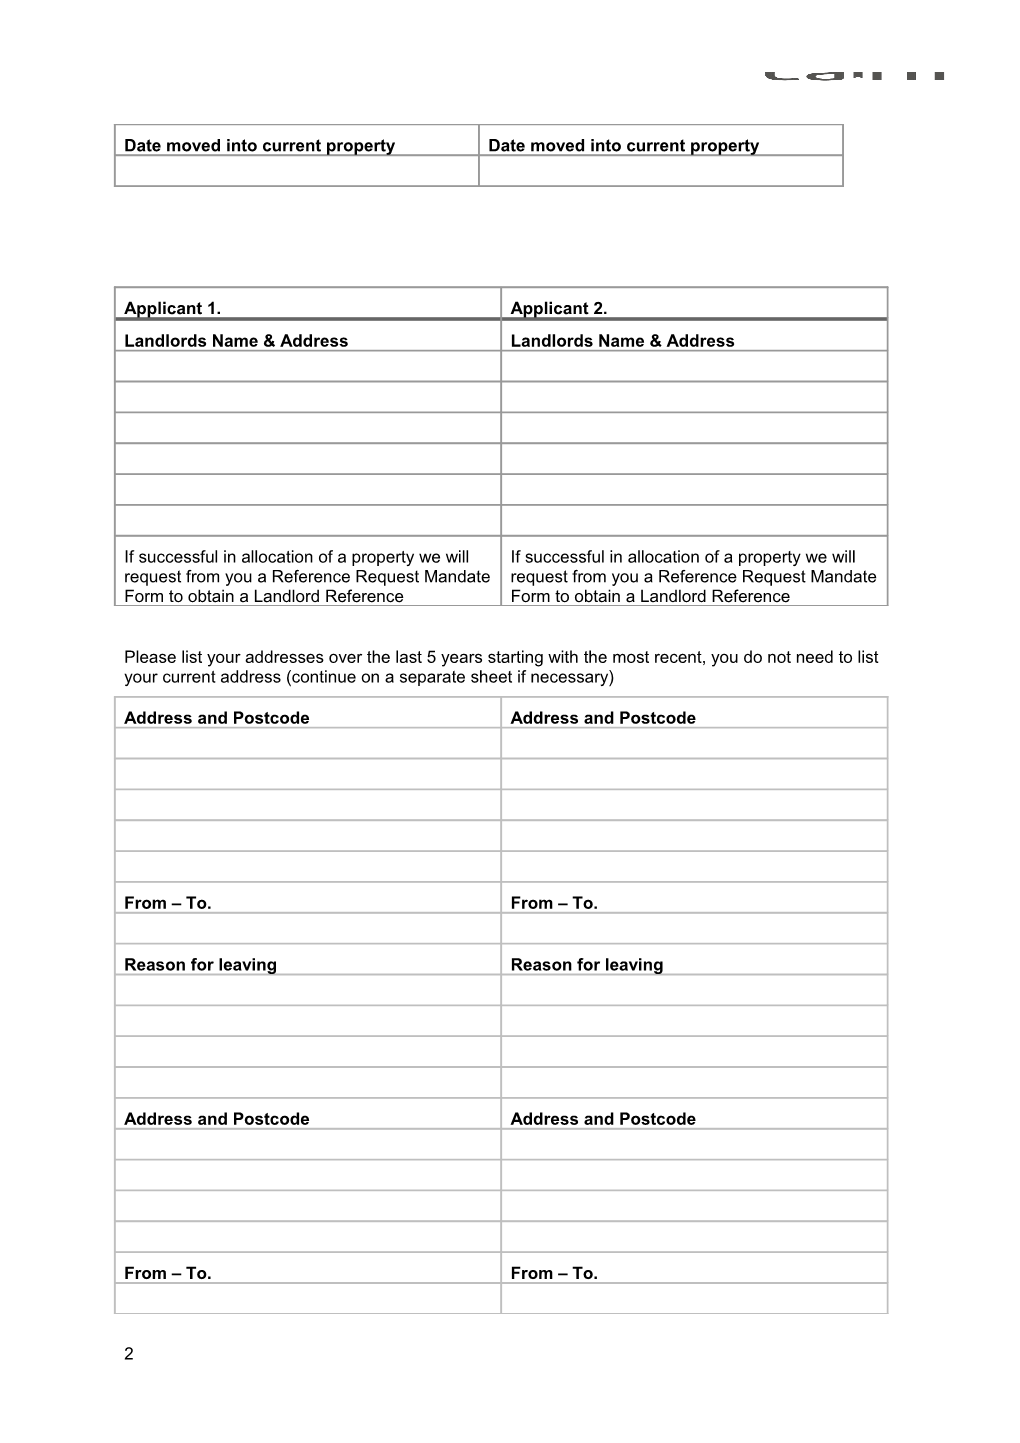 Cairn Living Ltd Application Form